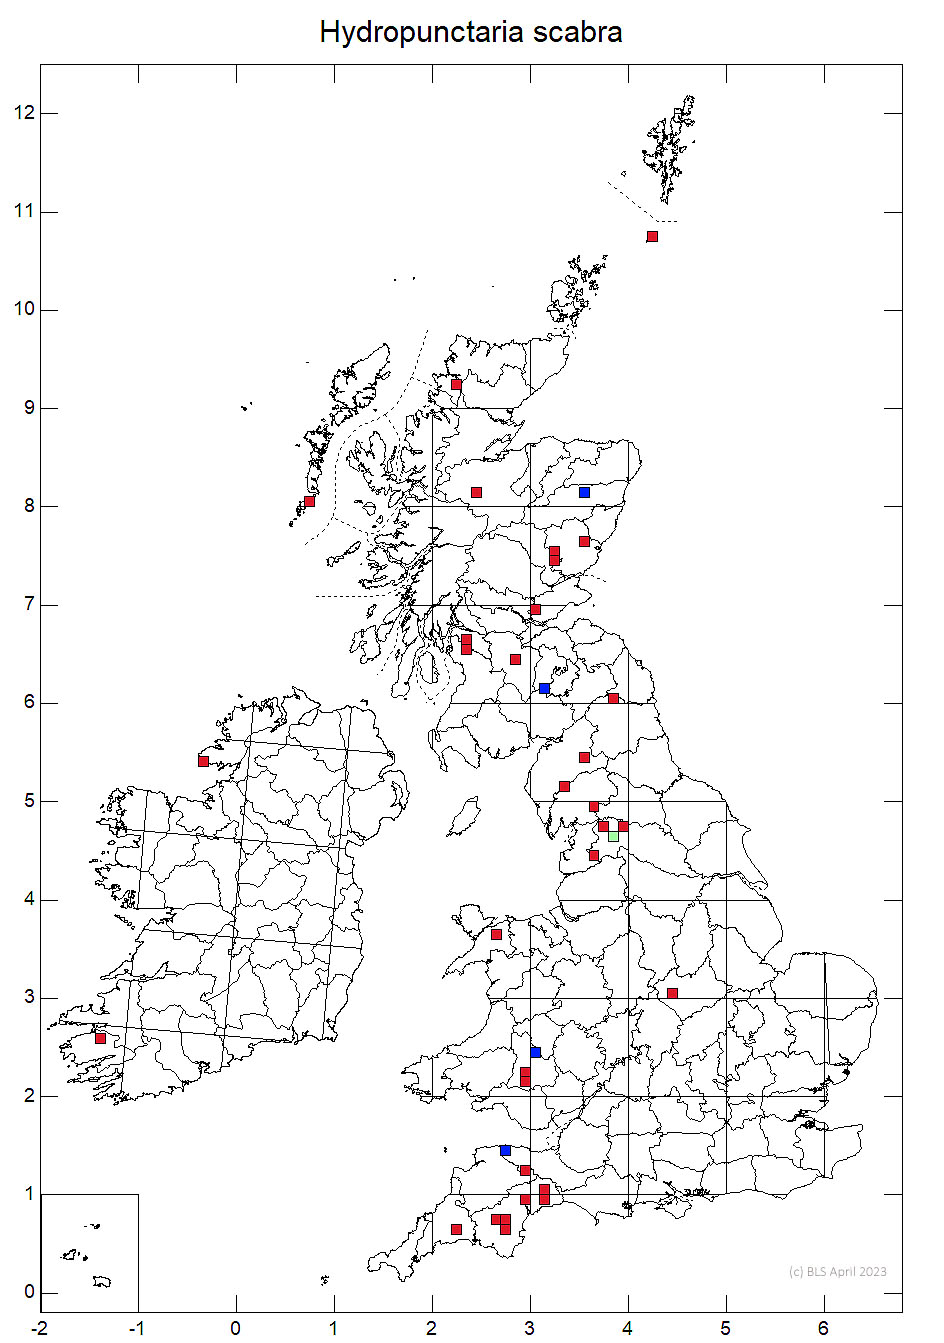 Hydropunctaria scabra 10km sq distribution map